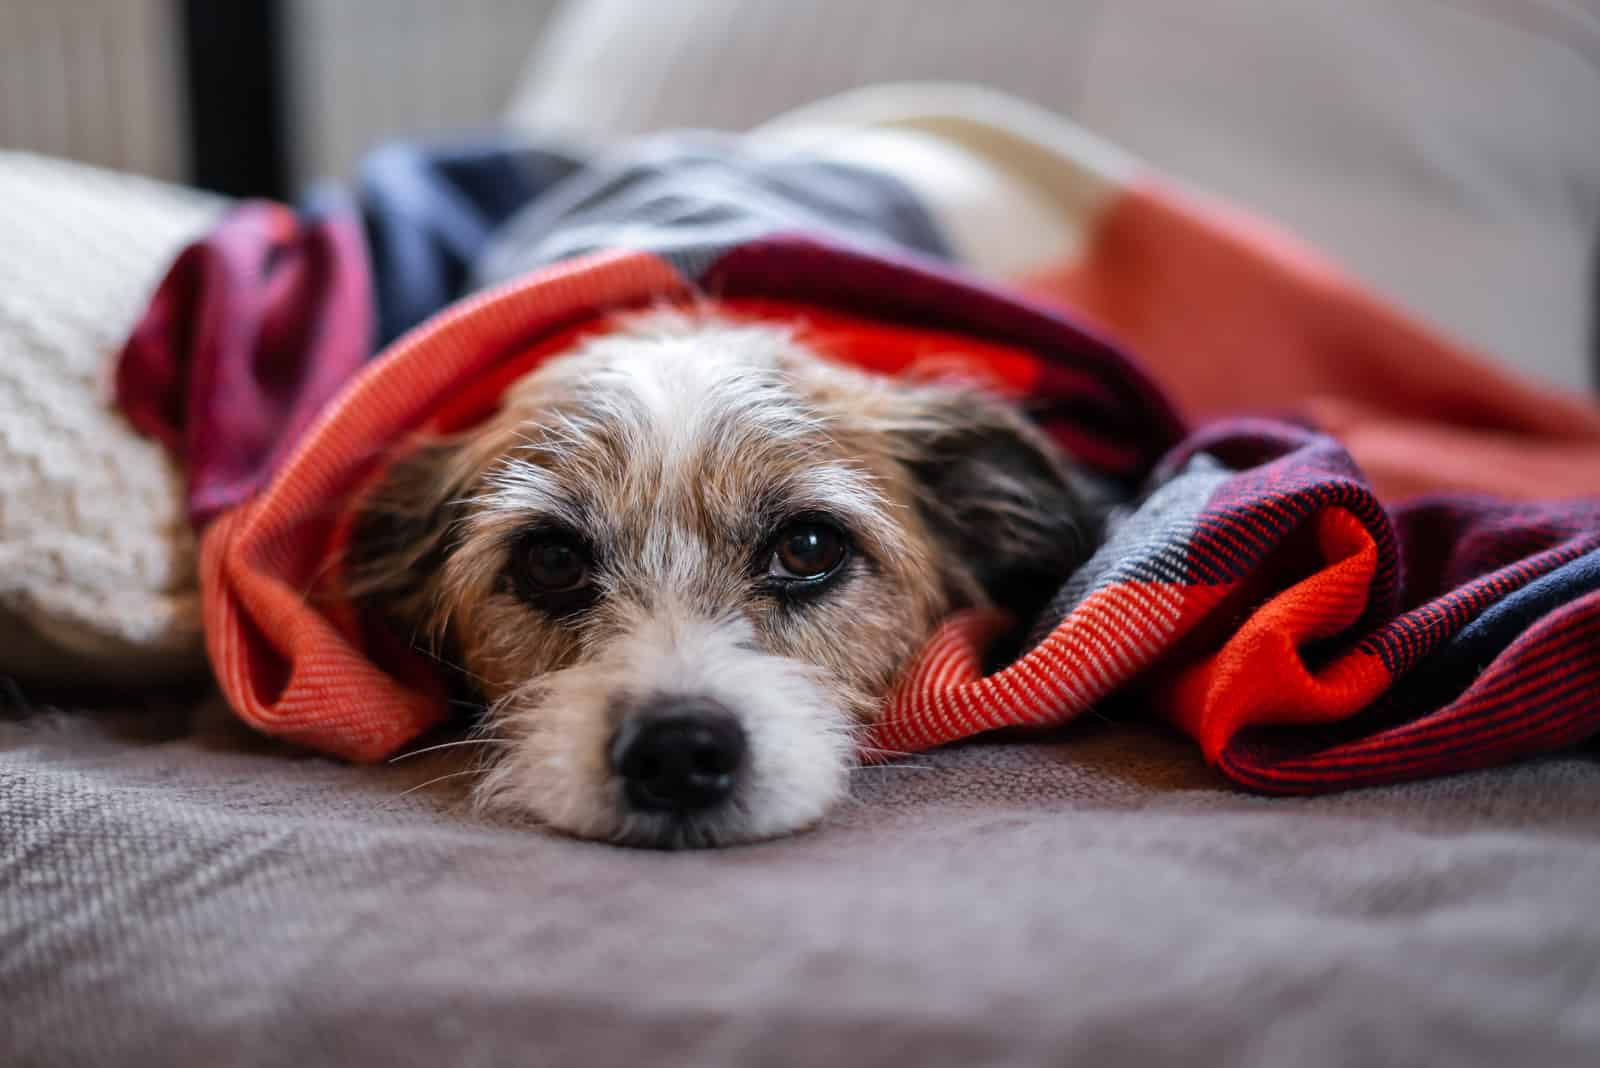 small sick dog under blanket